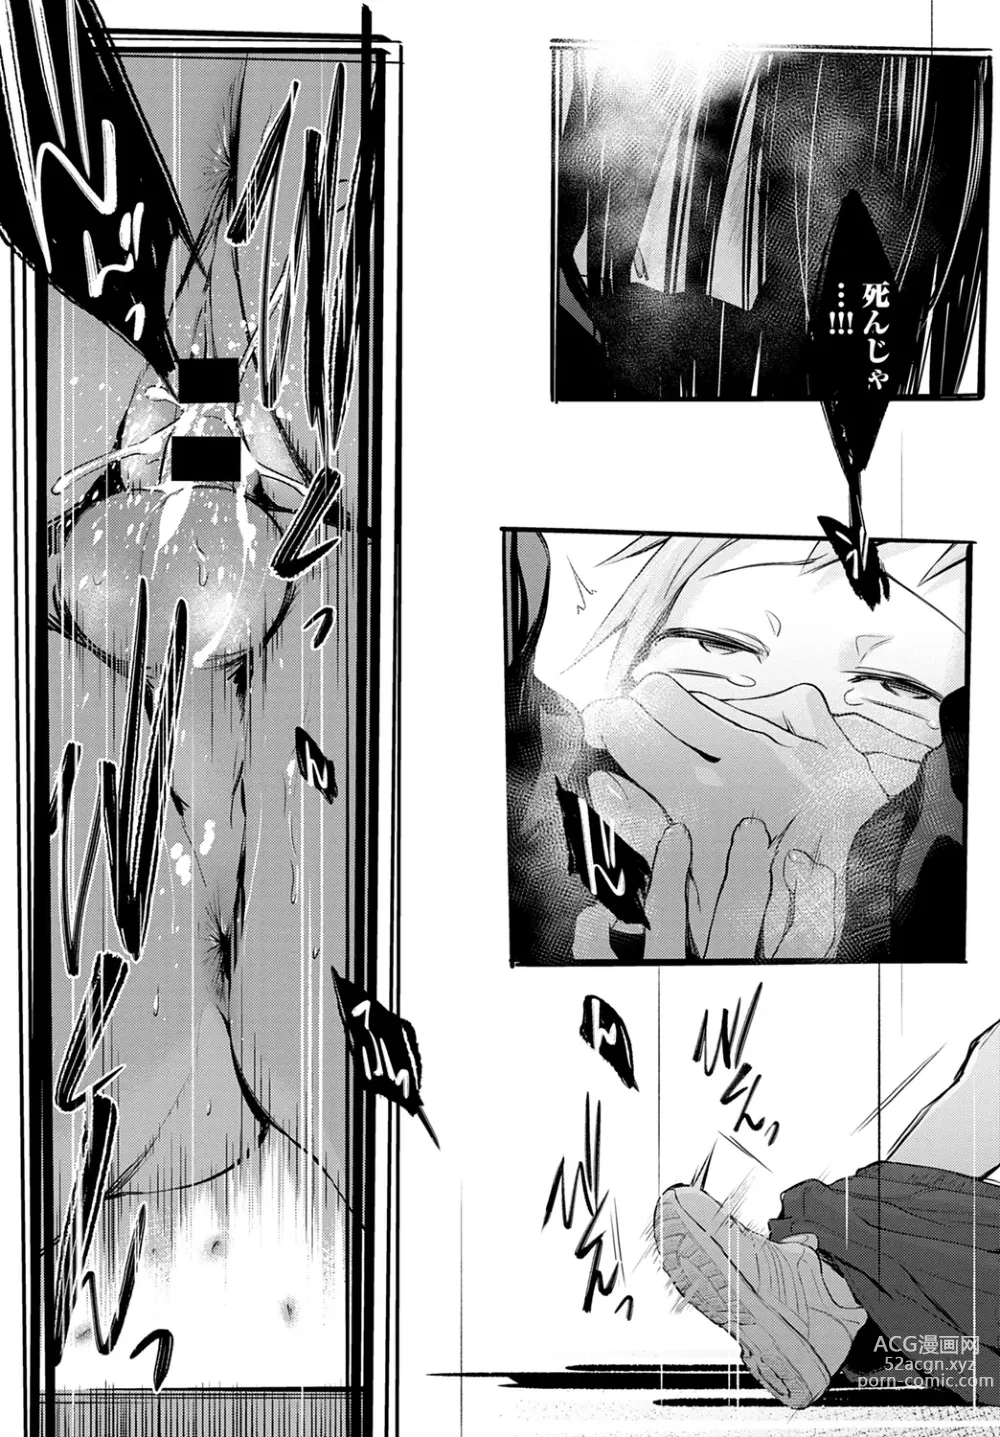 Page 19 of manga Shota Packun